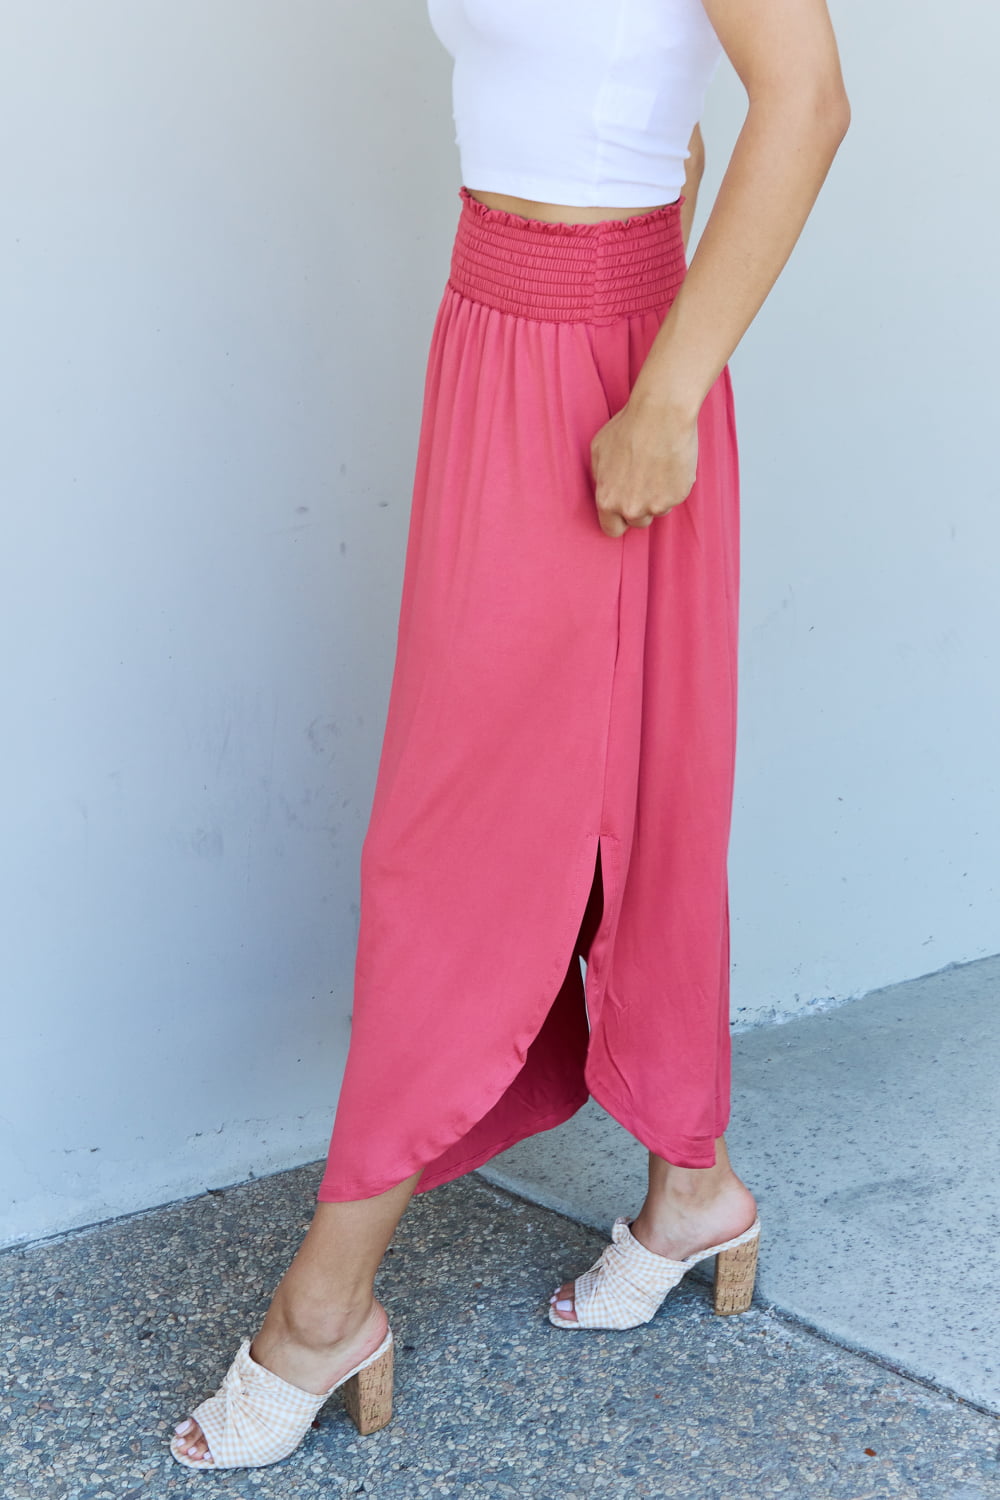 Doublju Comfort Princess Full Size High Waist Scoop Hem Maxi Skirt in Hot Pink - Tigbul's Fashion